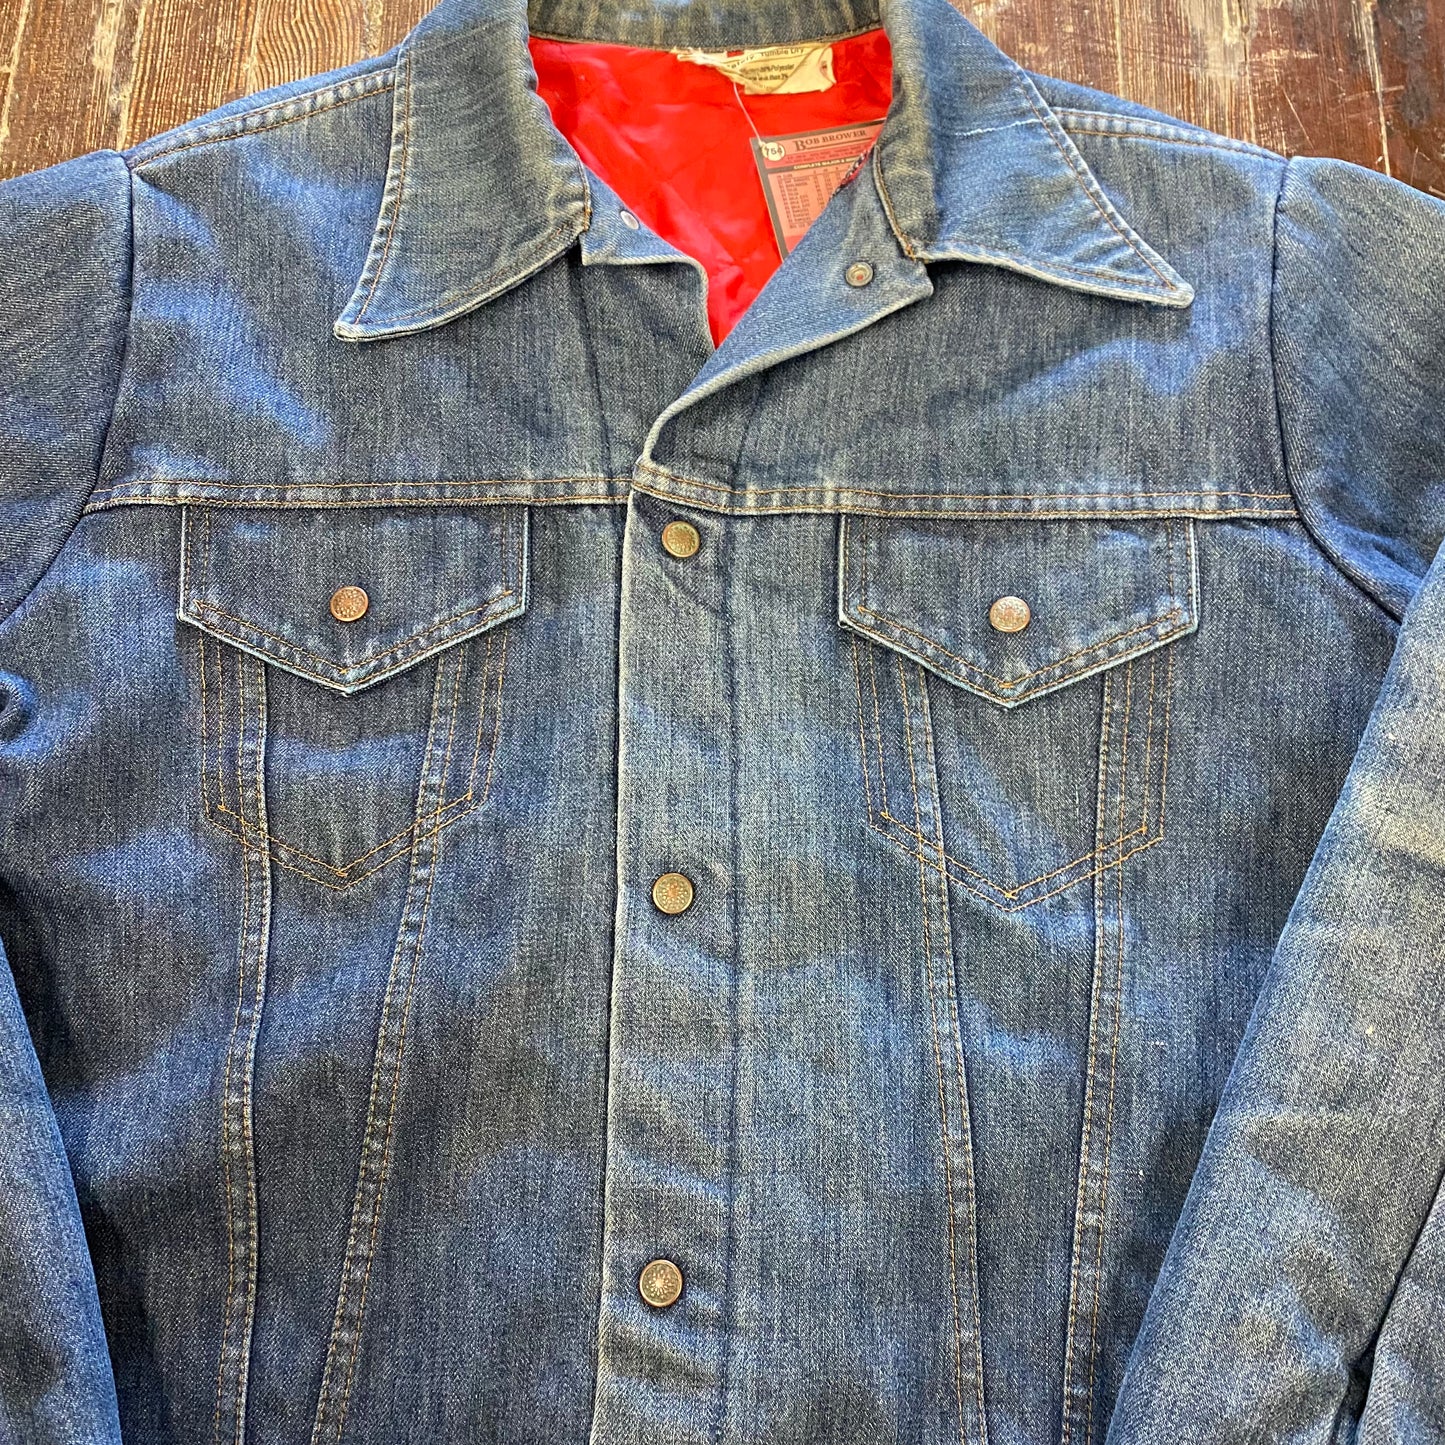 1970s JC Penney Lined Denim Jacket - Size Large